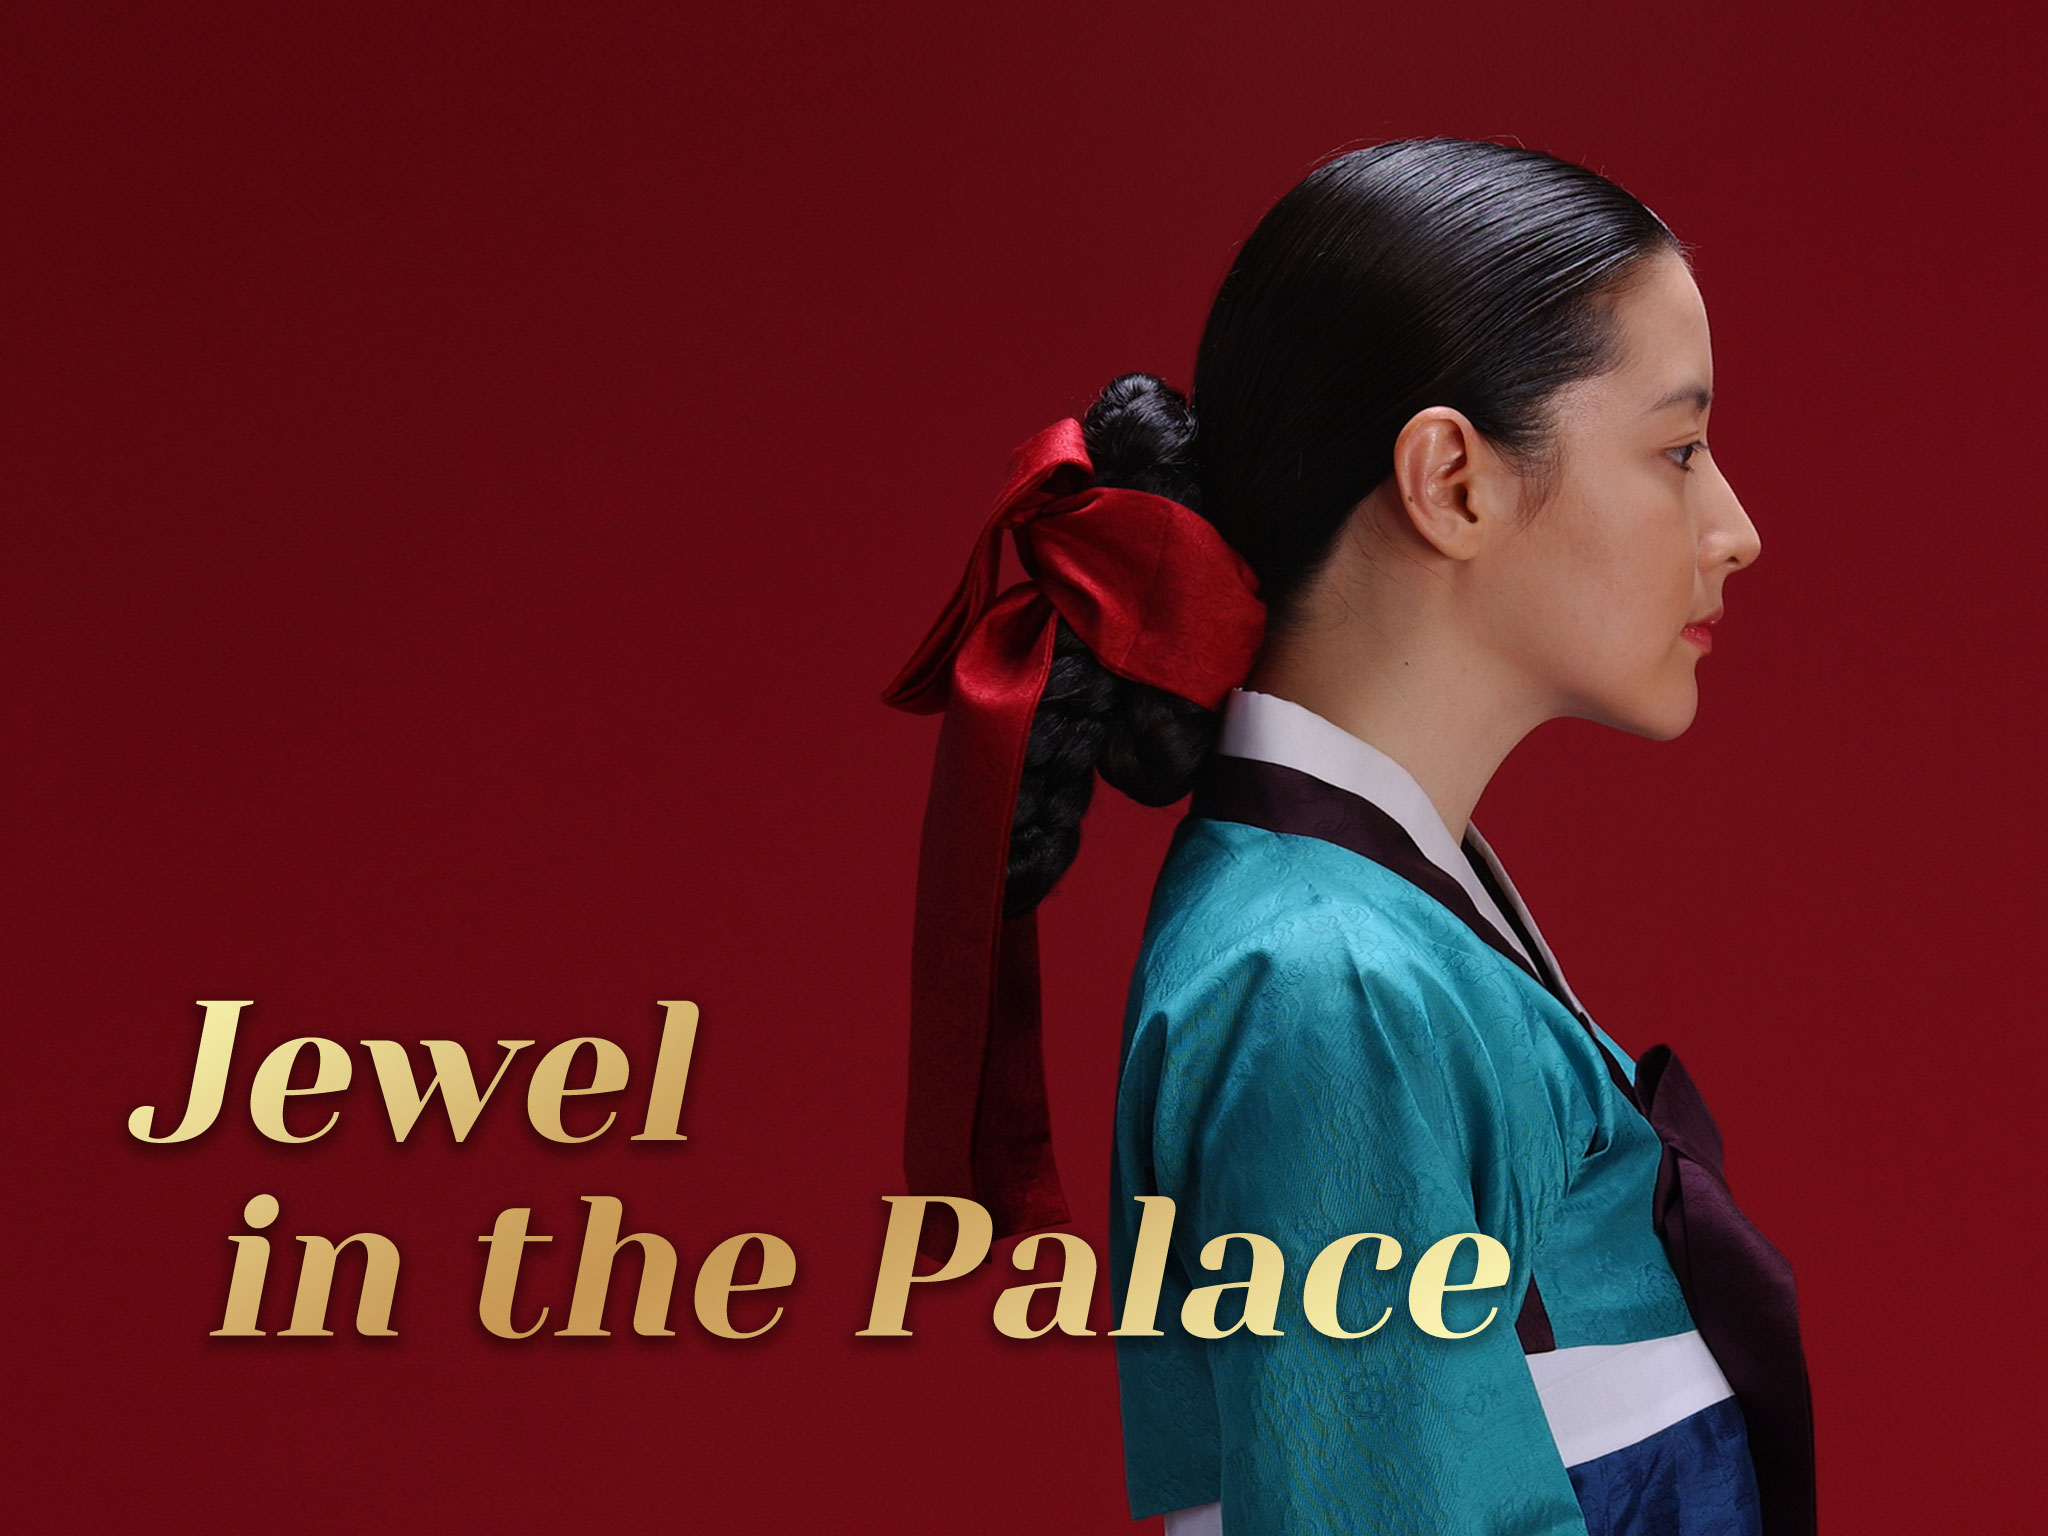 jewel in the palace - dormas historicos - mejores K-Dramas históricos